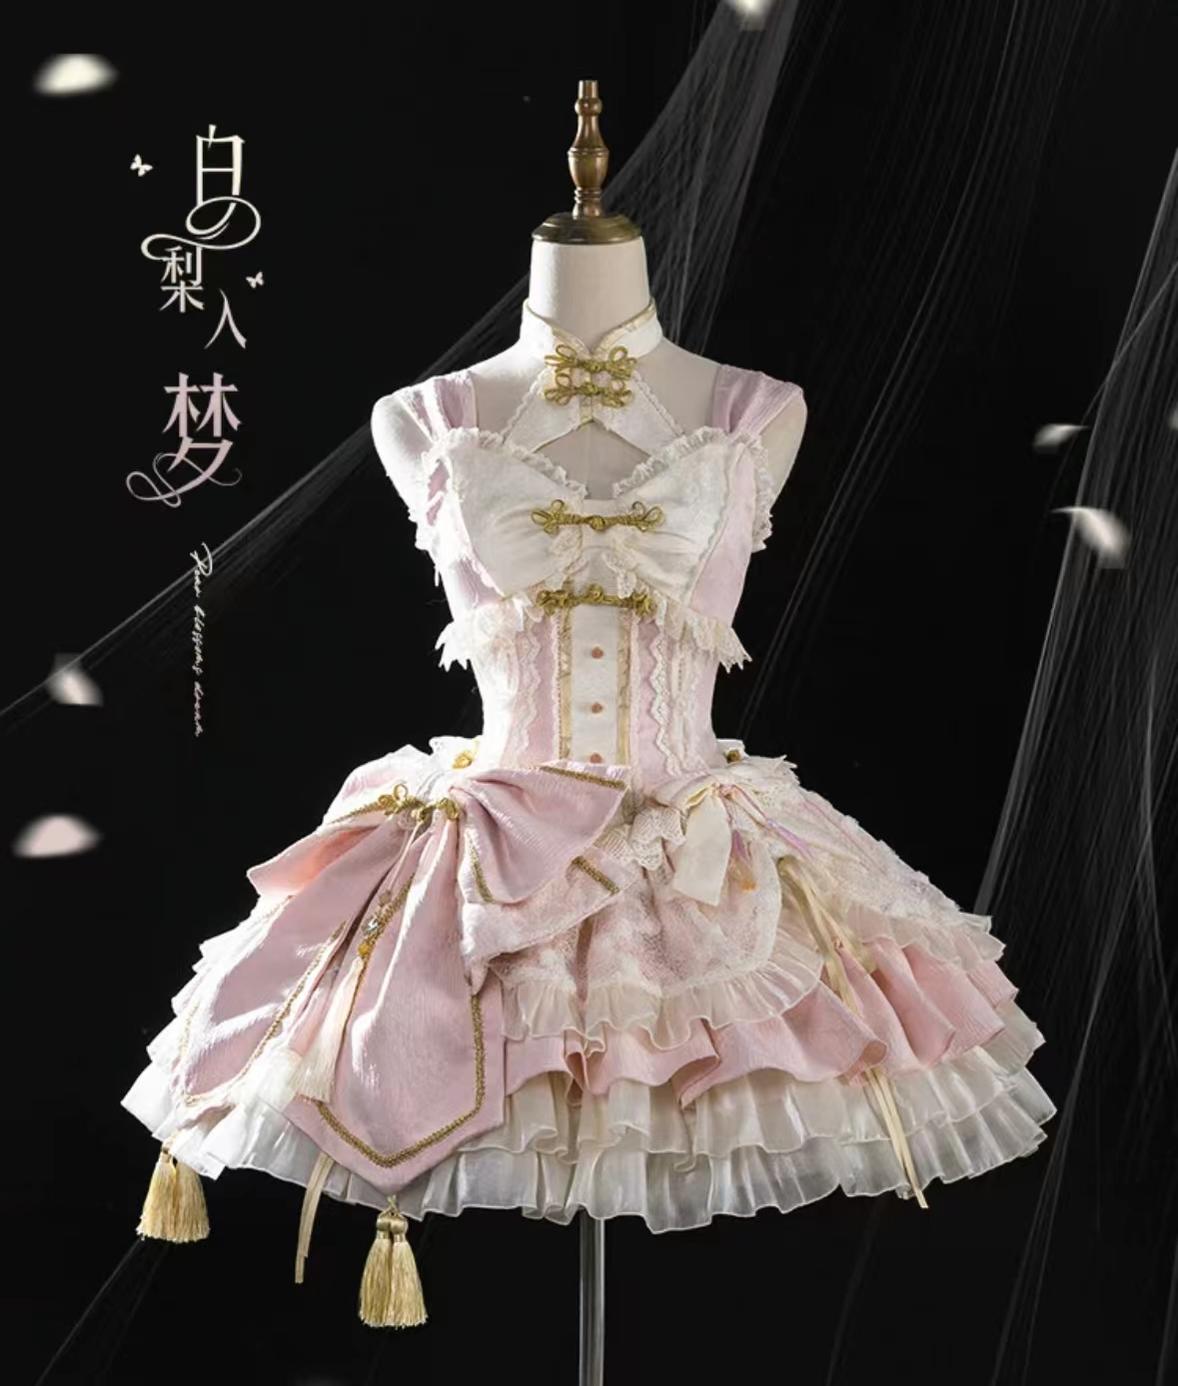 Mewroco~White Pear Dream~Han Lolita JSK Dress Halter Dress for Summer Wear S Pink jsk 